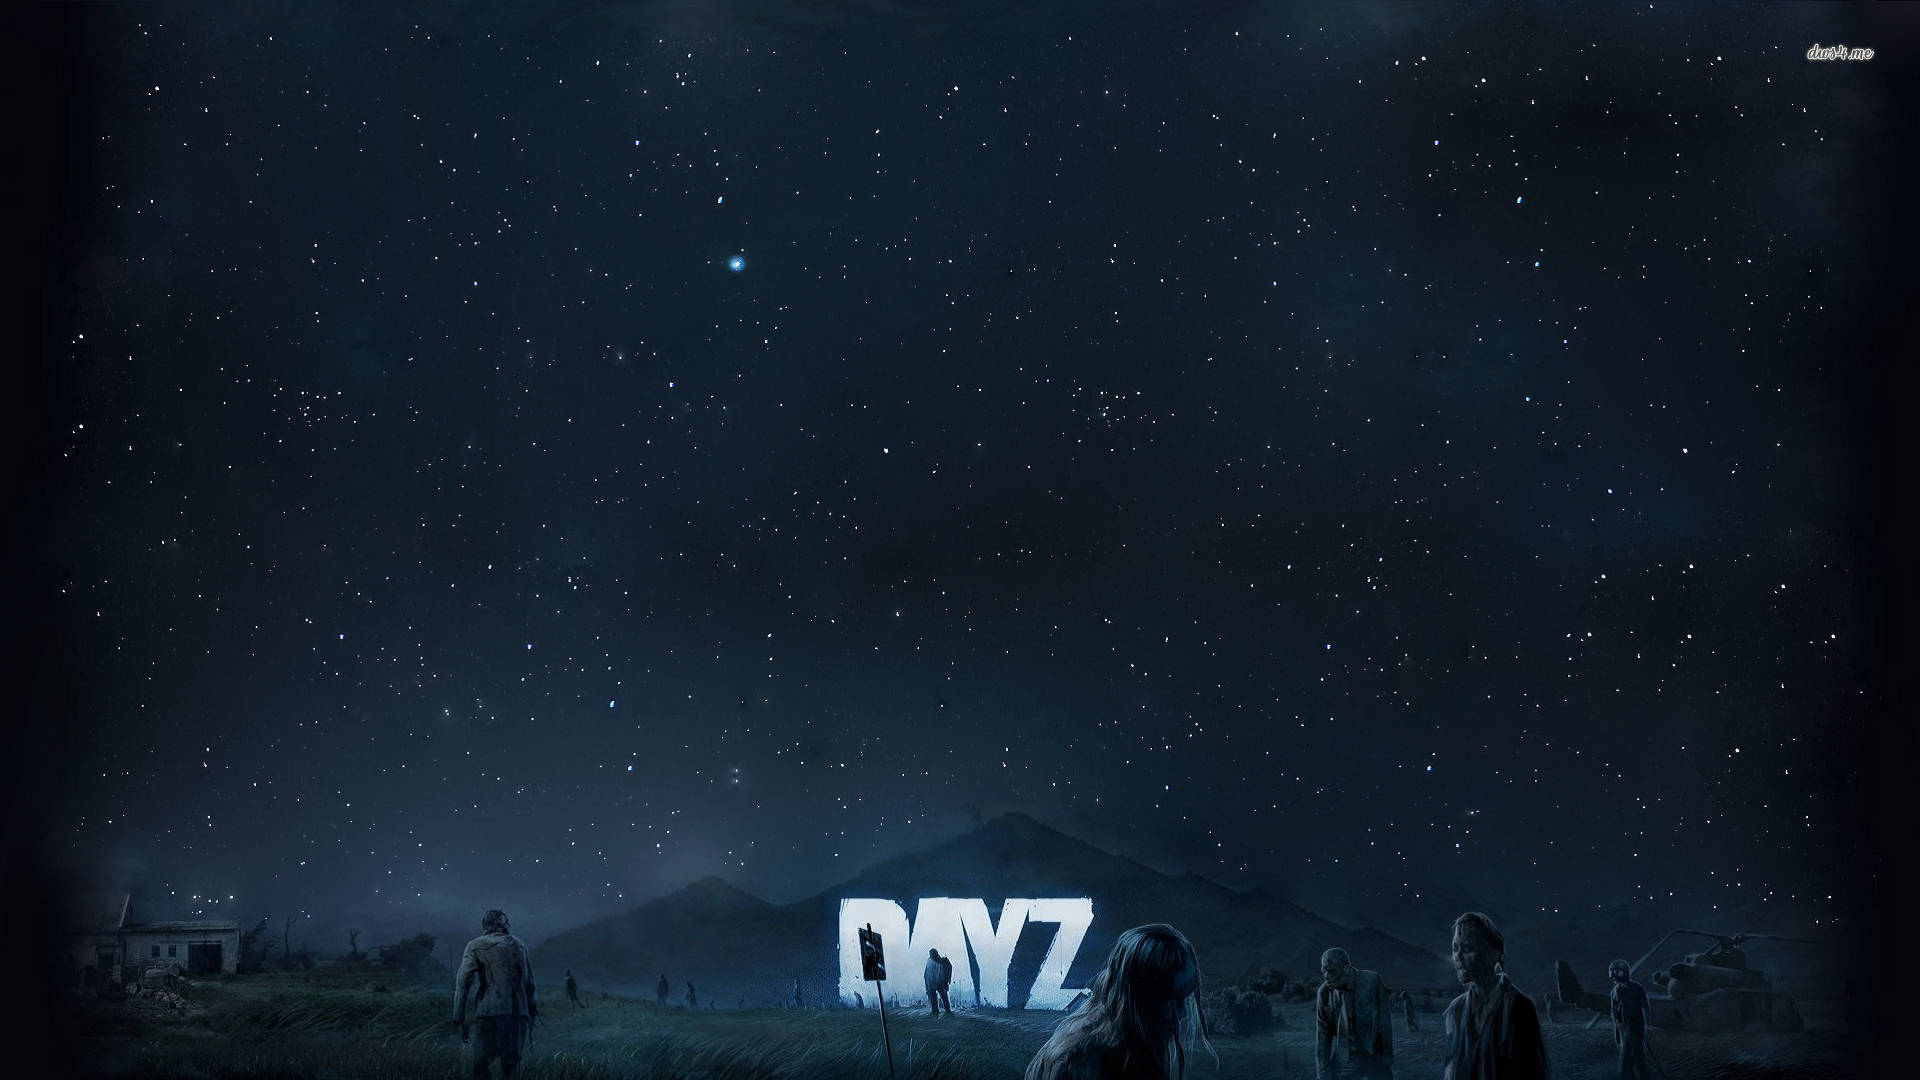 Dayz Starry Night Sky Picture